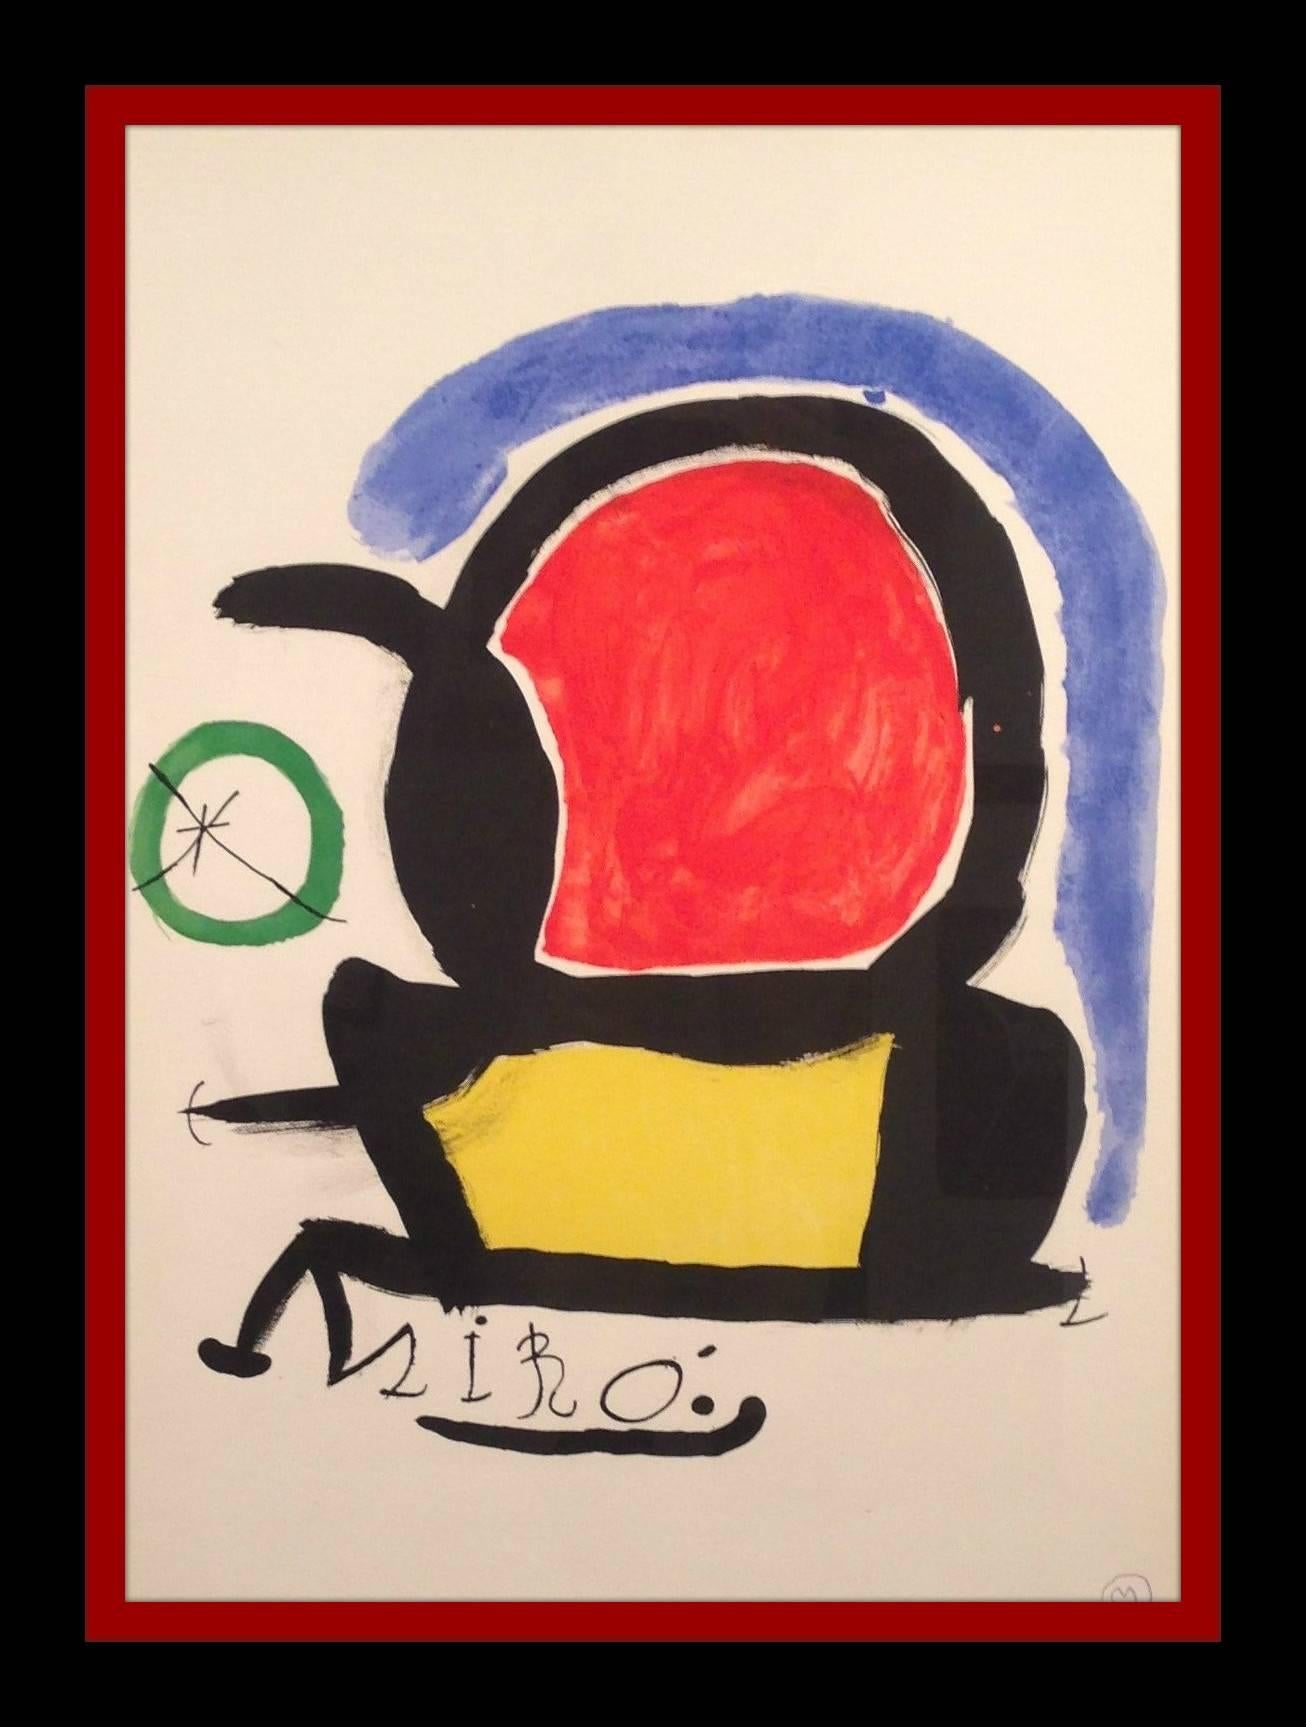 Miro 185. vertical. black. red. yellow.  TAPIZ DE TARRAGONA - Print by Joan Miró